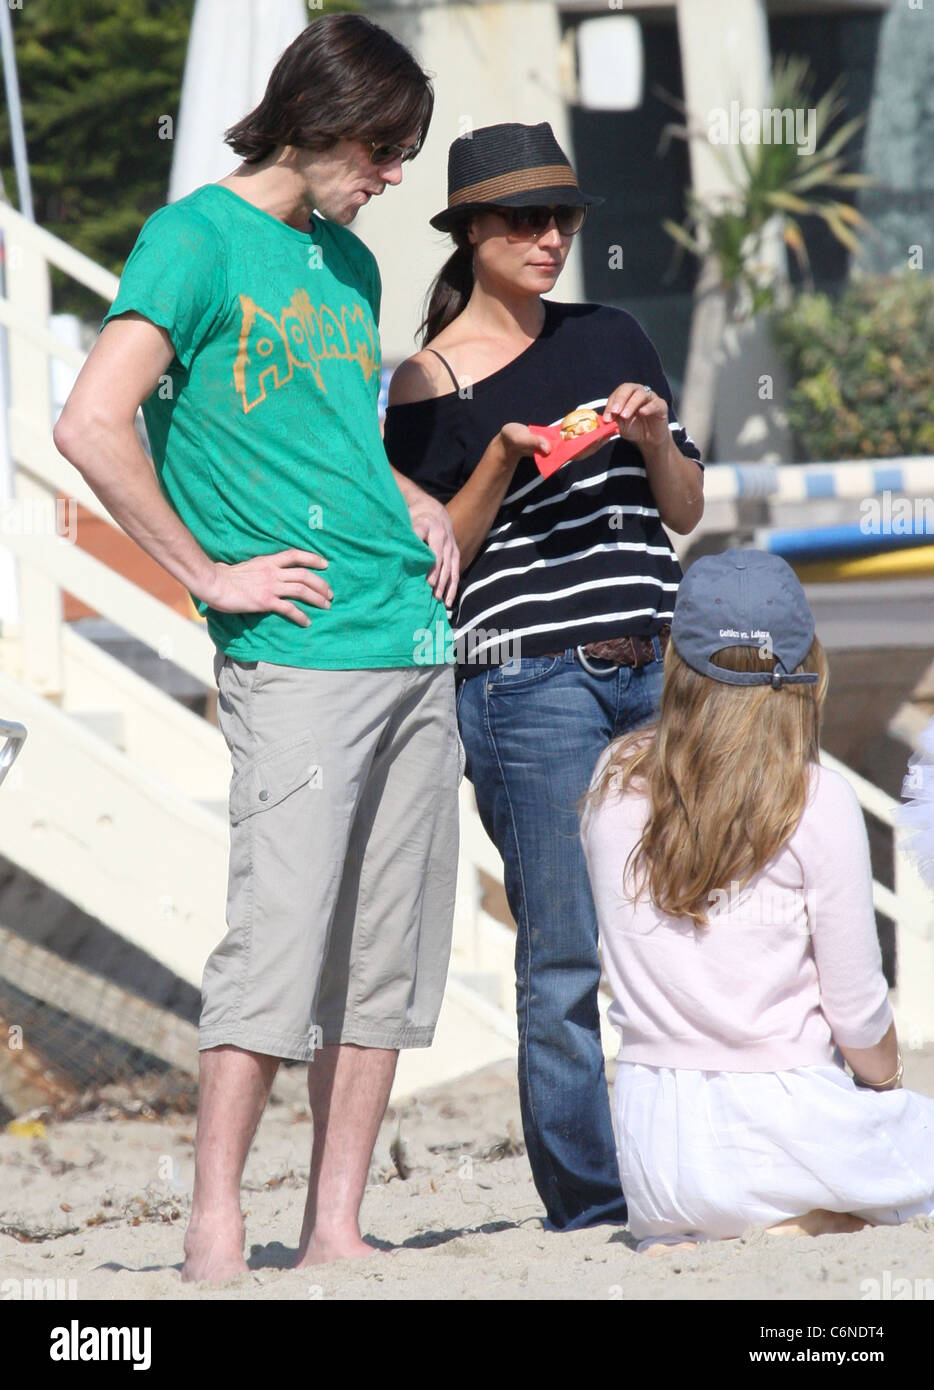 Jim Carrey with daughter Jane Carrey on Malibu Beach Malibu, California - 04.07.10 Stock Photo